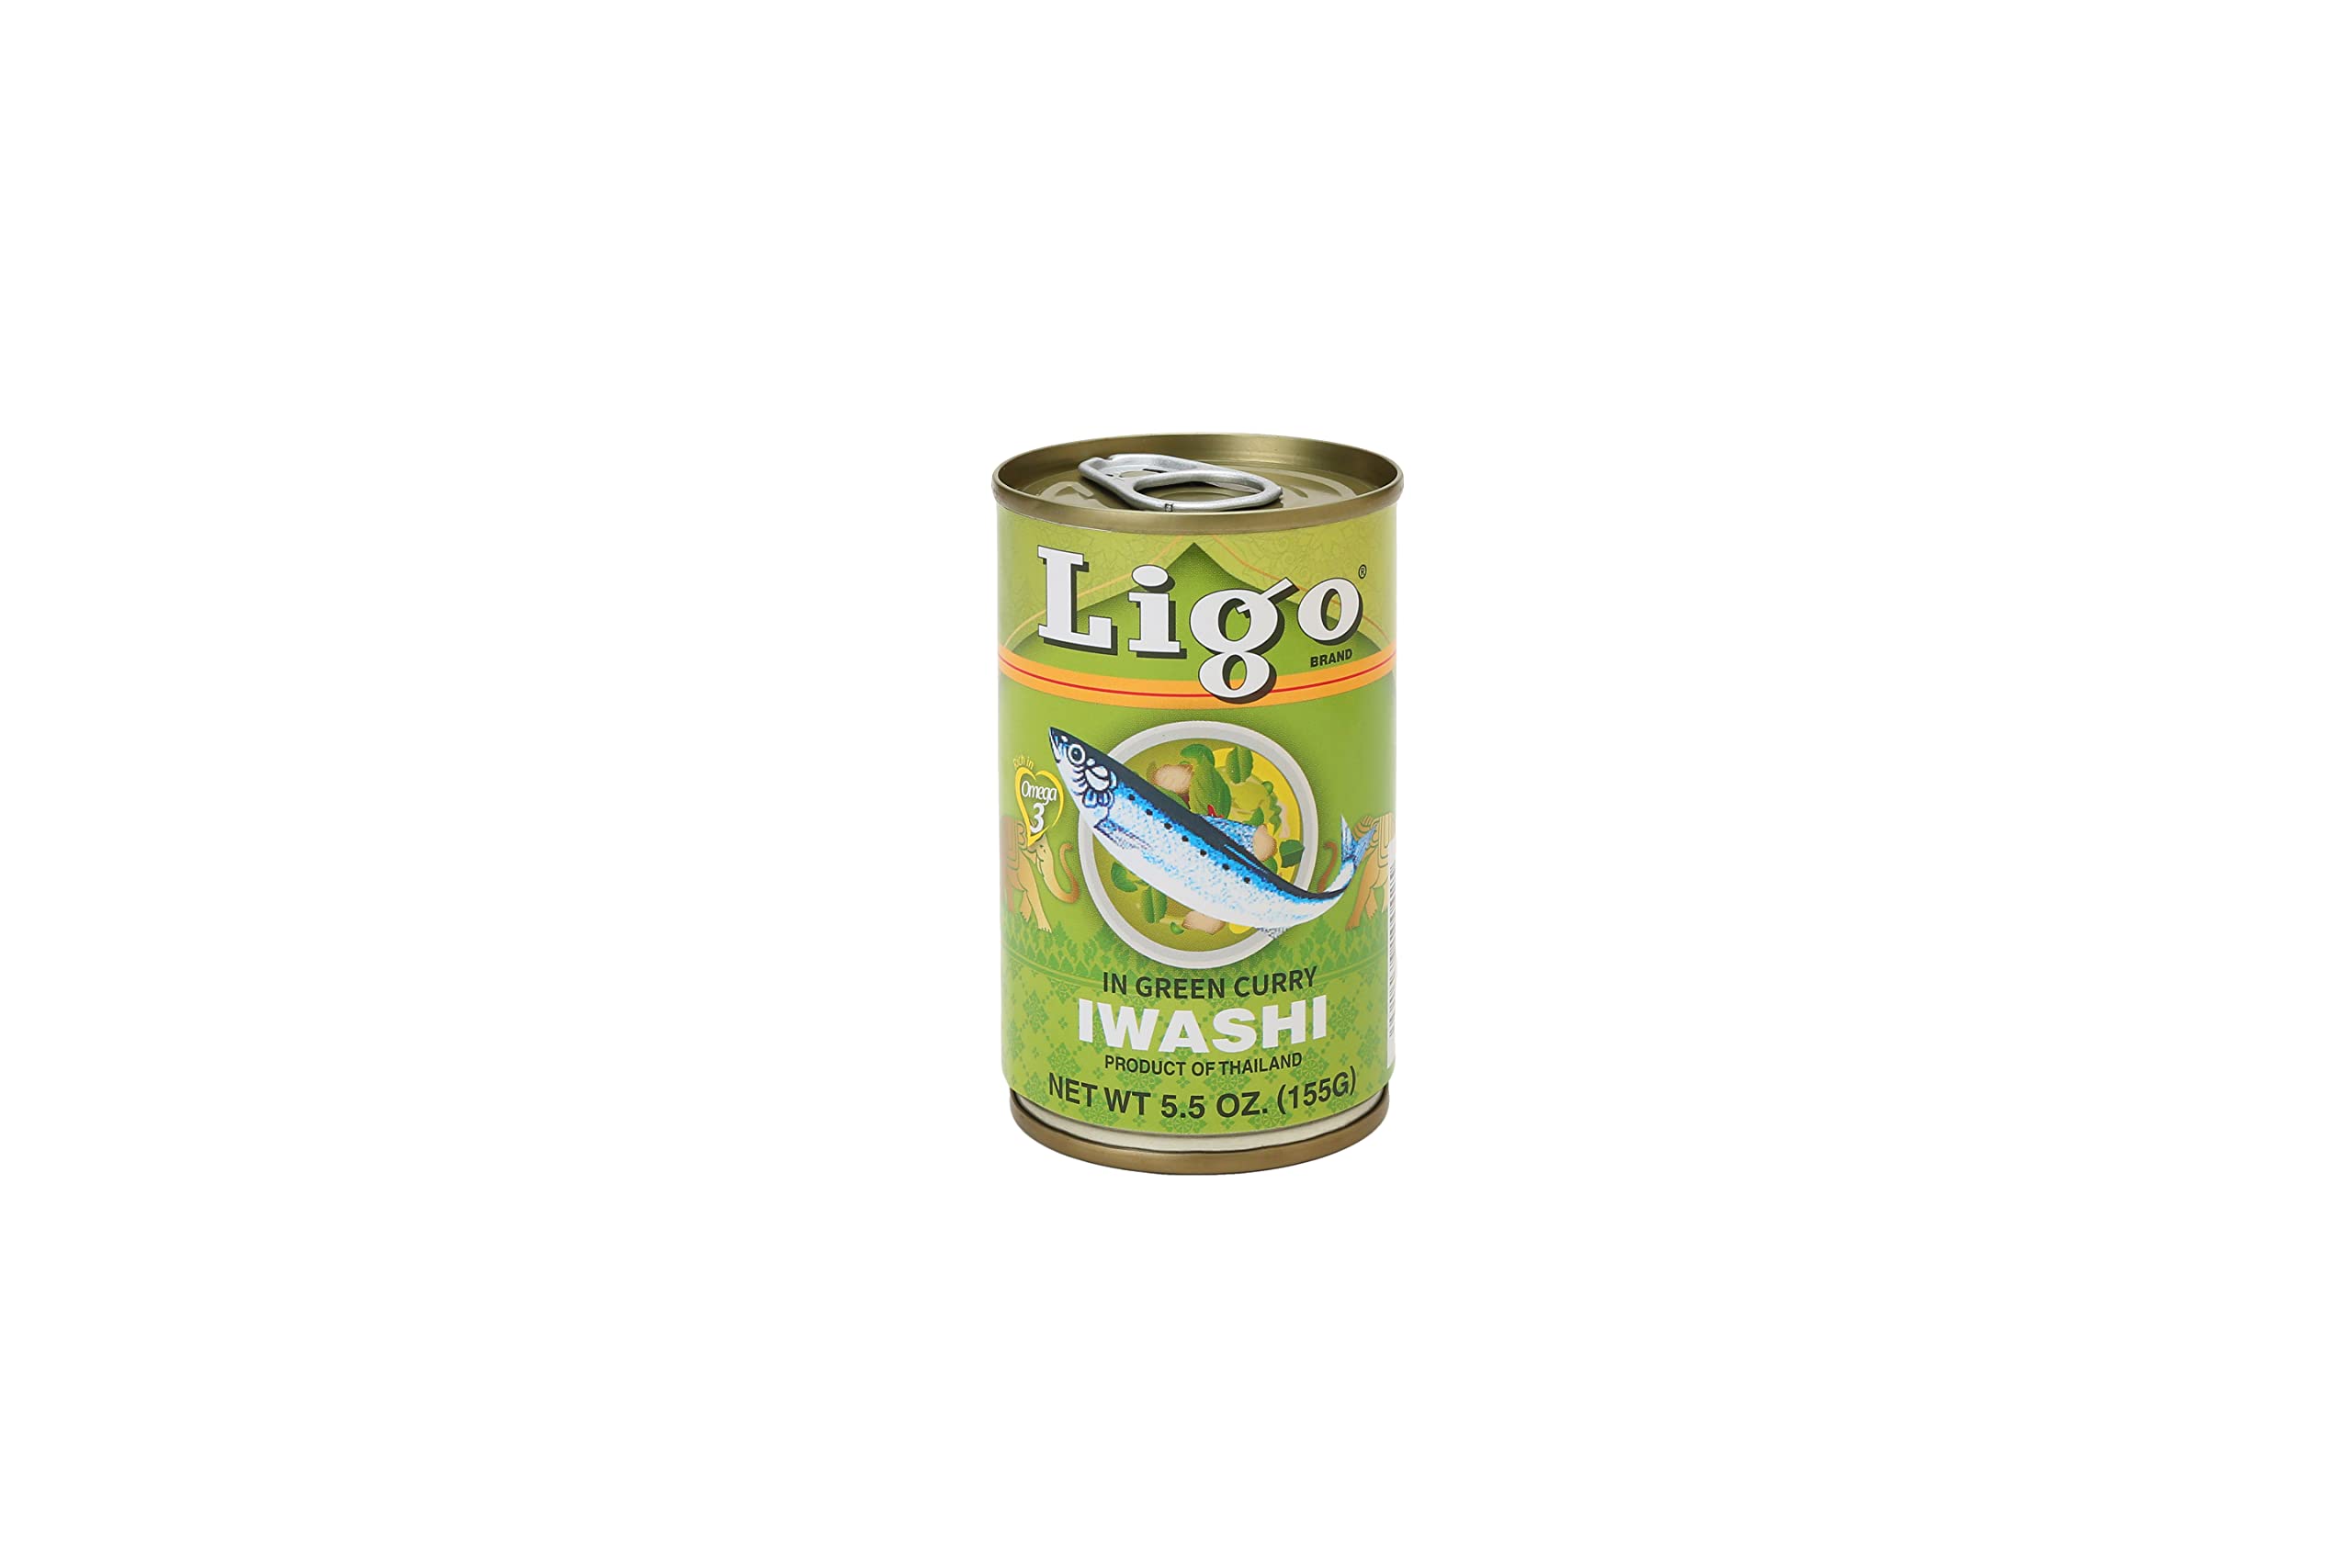 chính　Disaster　Sardine　Nhật　Ligo　Can　Amazon　Preparedness,　Sardine　trên　Reserved　Food,　Curry,　Sale)　Green　(Case　x　oz　Cans　50　g)　(155　hãng　Mua　Fado　5.5　2023